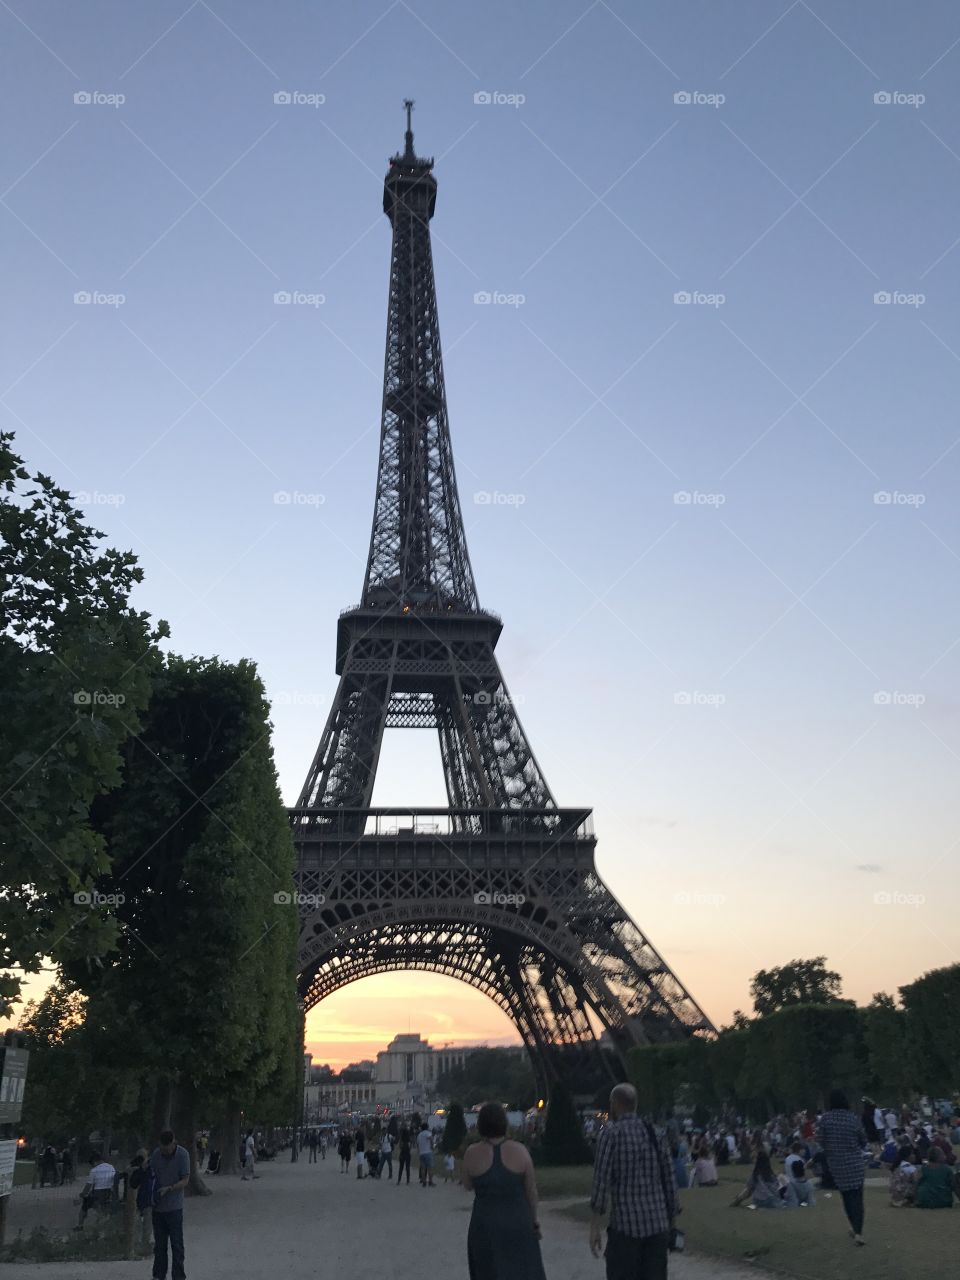 Eiffel Tower in Paris, France
